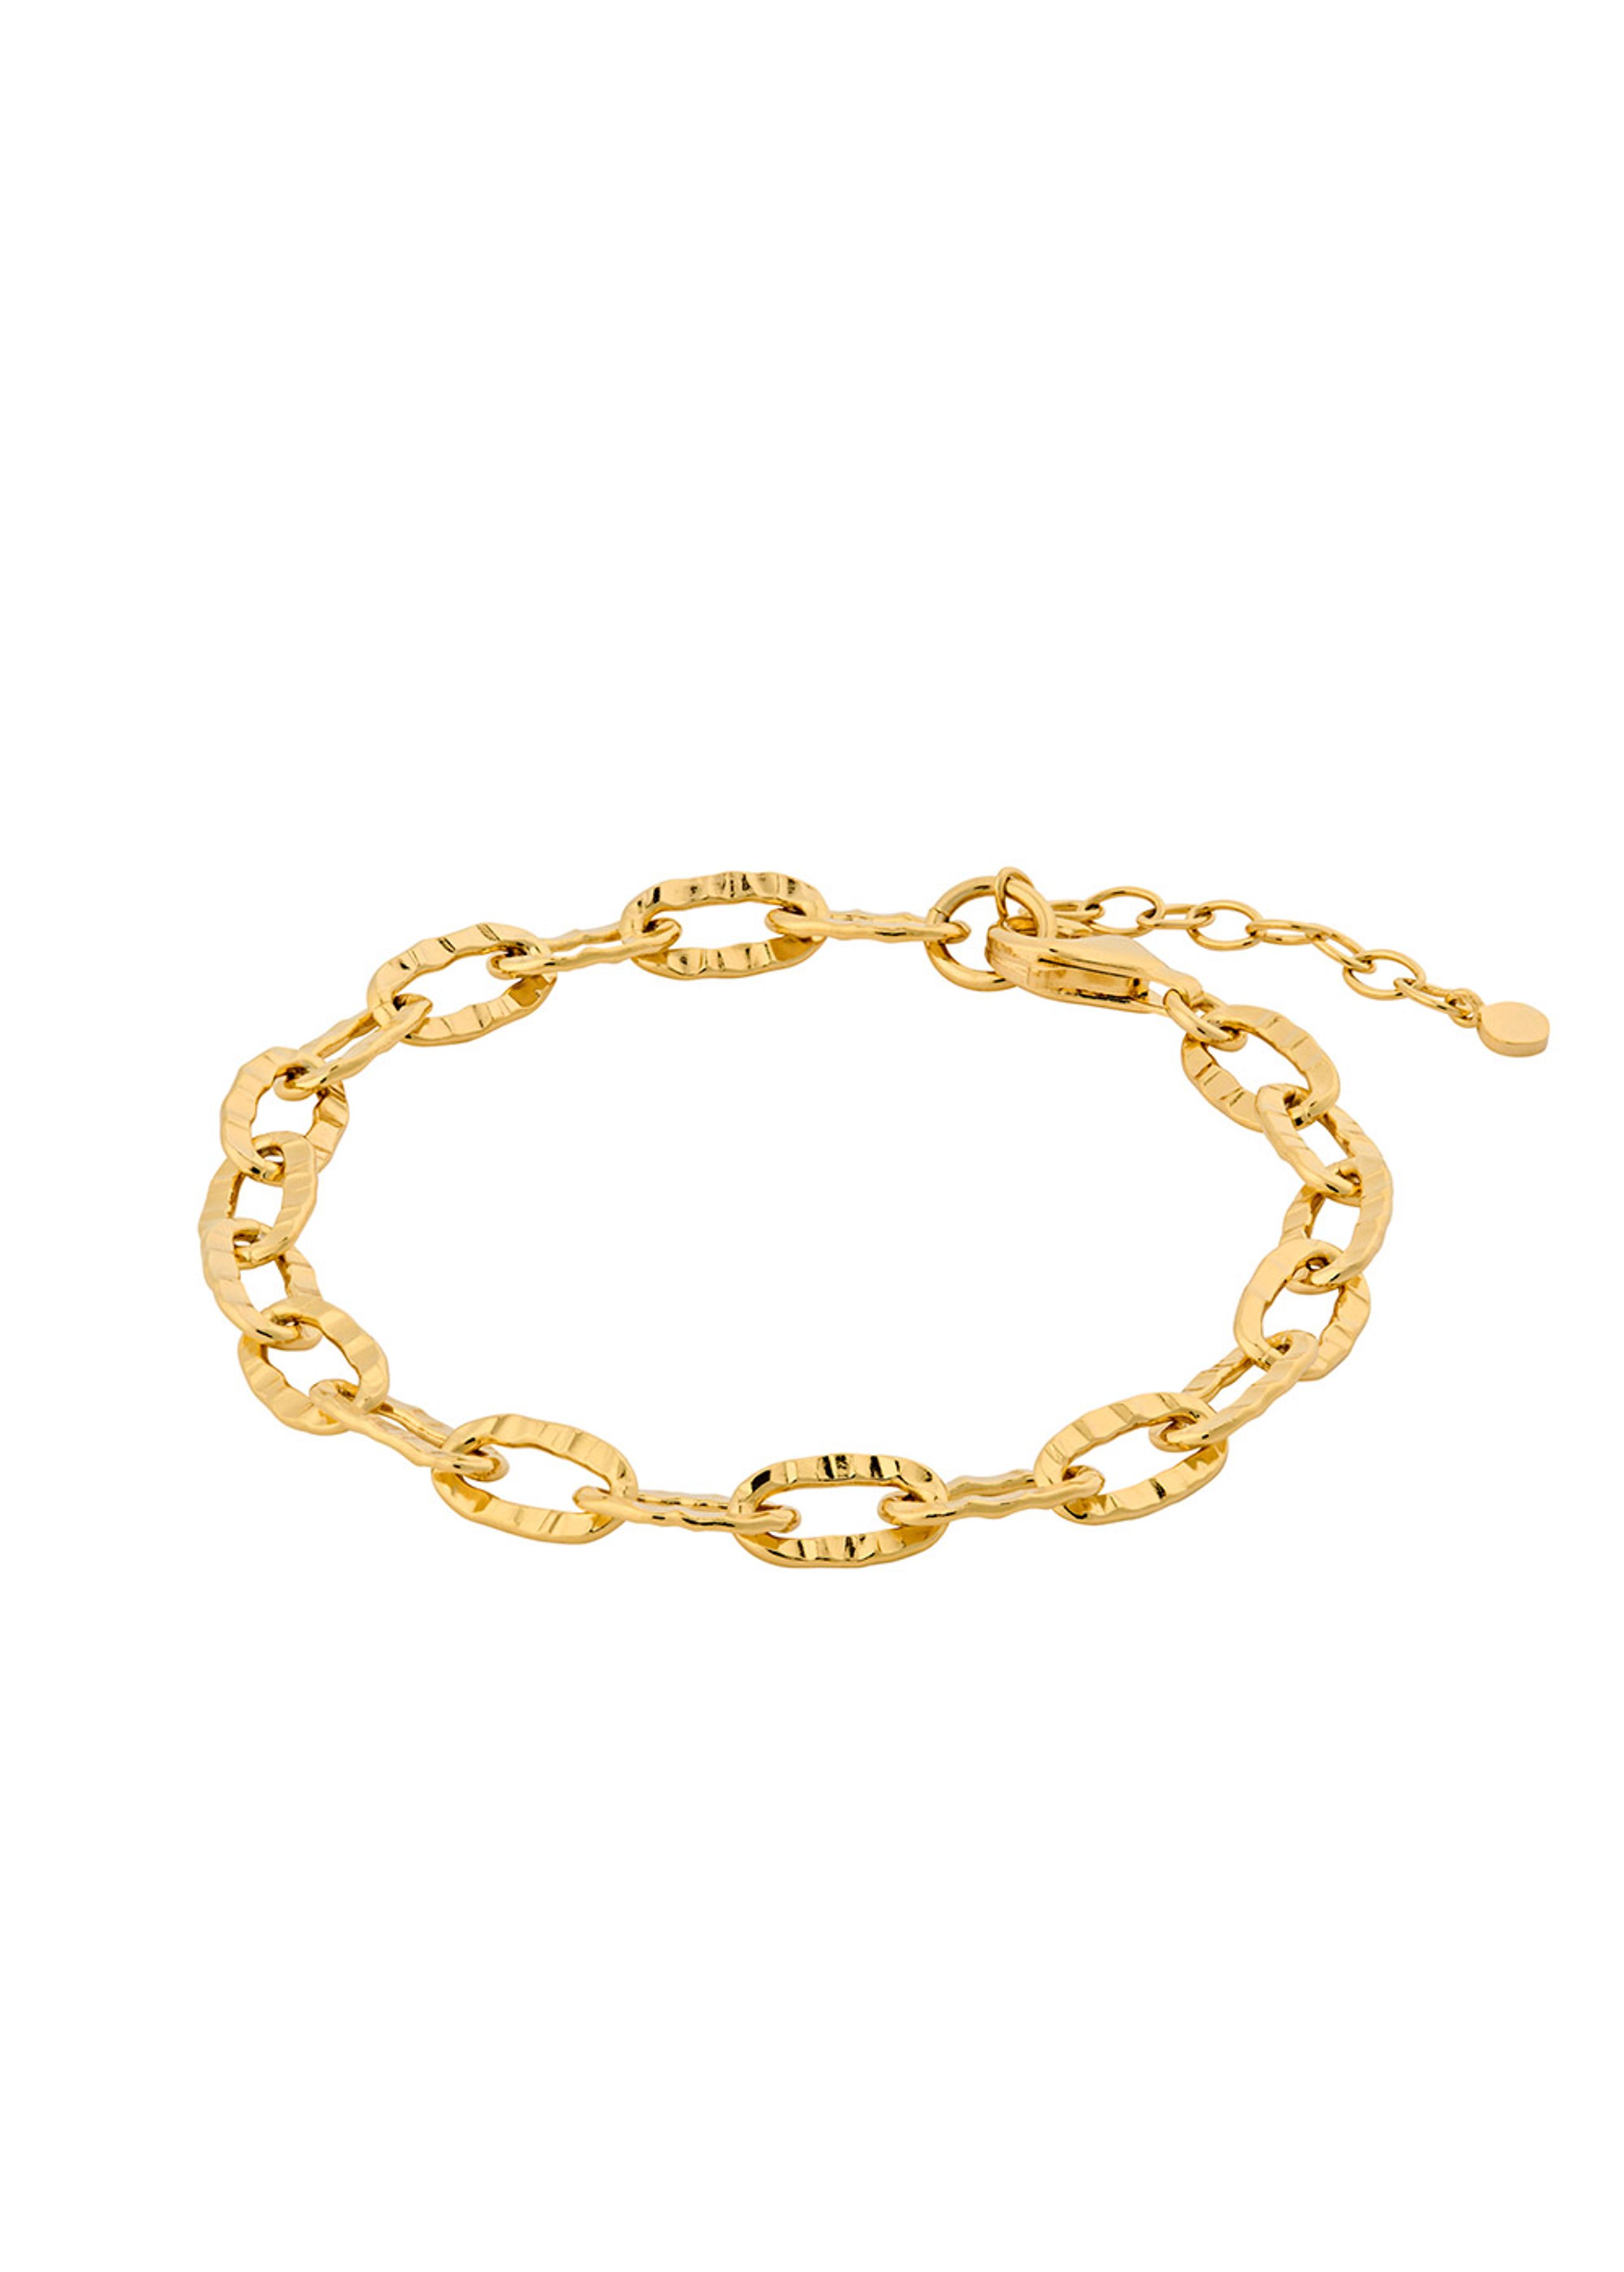 Pernille Corydon - Pulseiras - Ines Bracelet - Gold